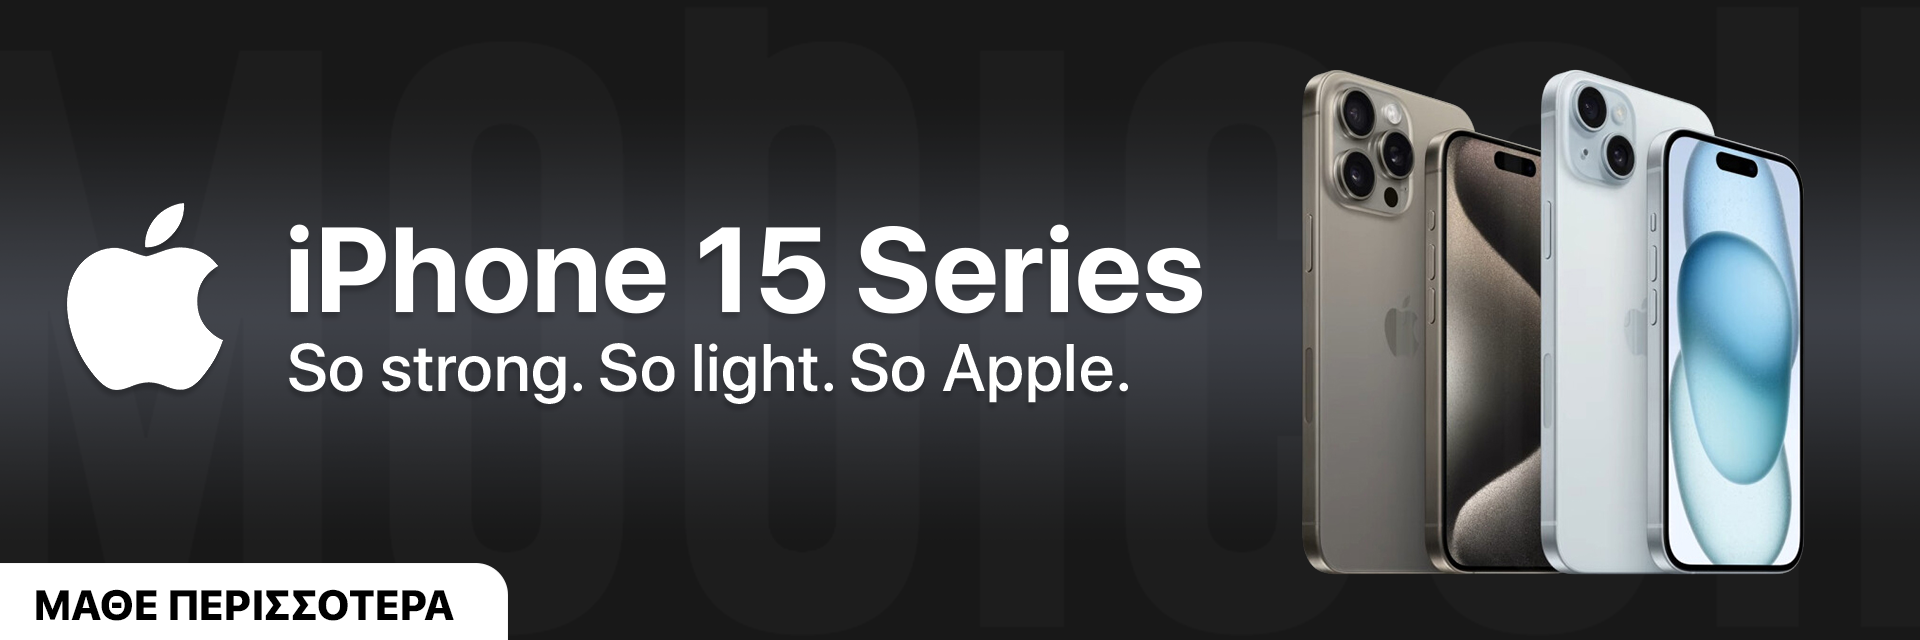 iPhone 15 Series Promo